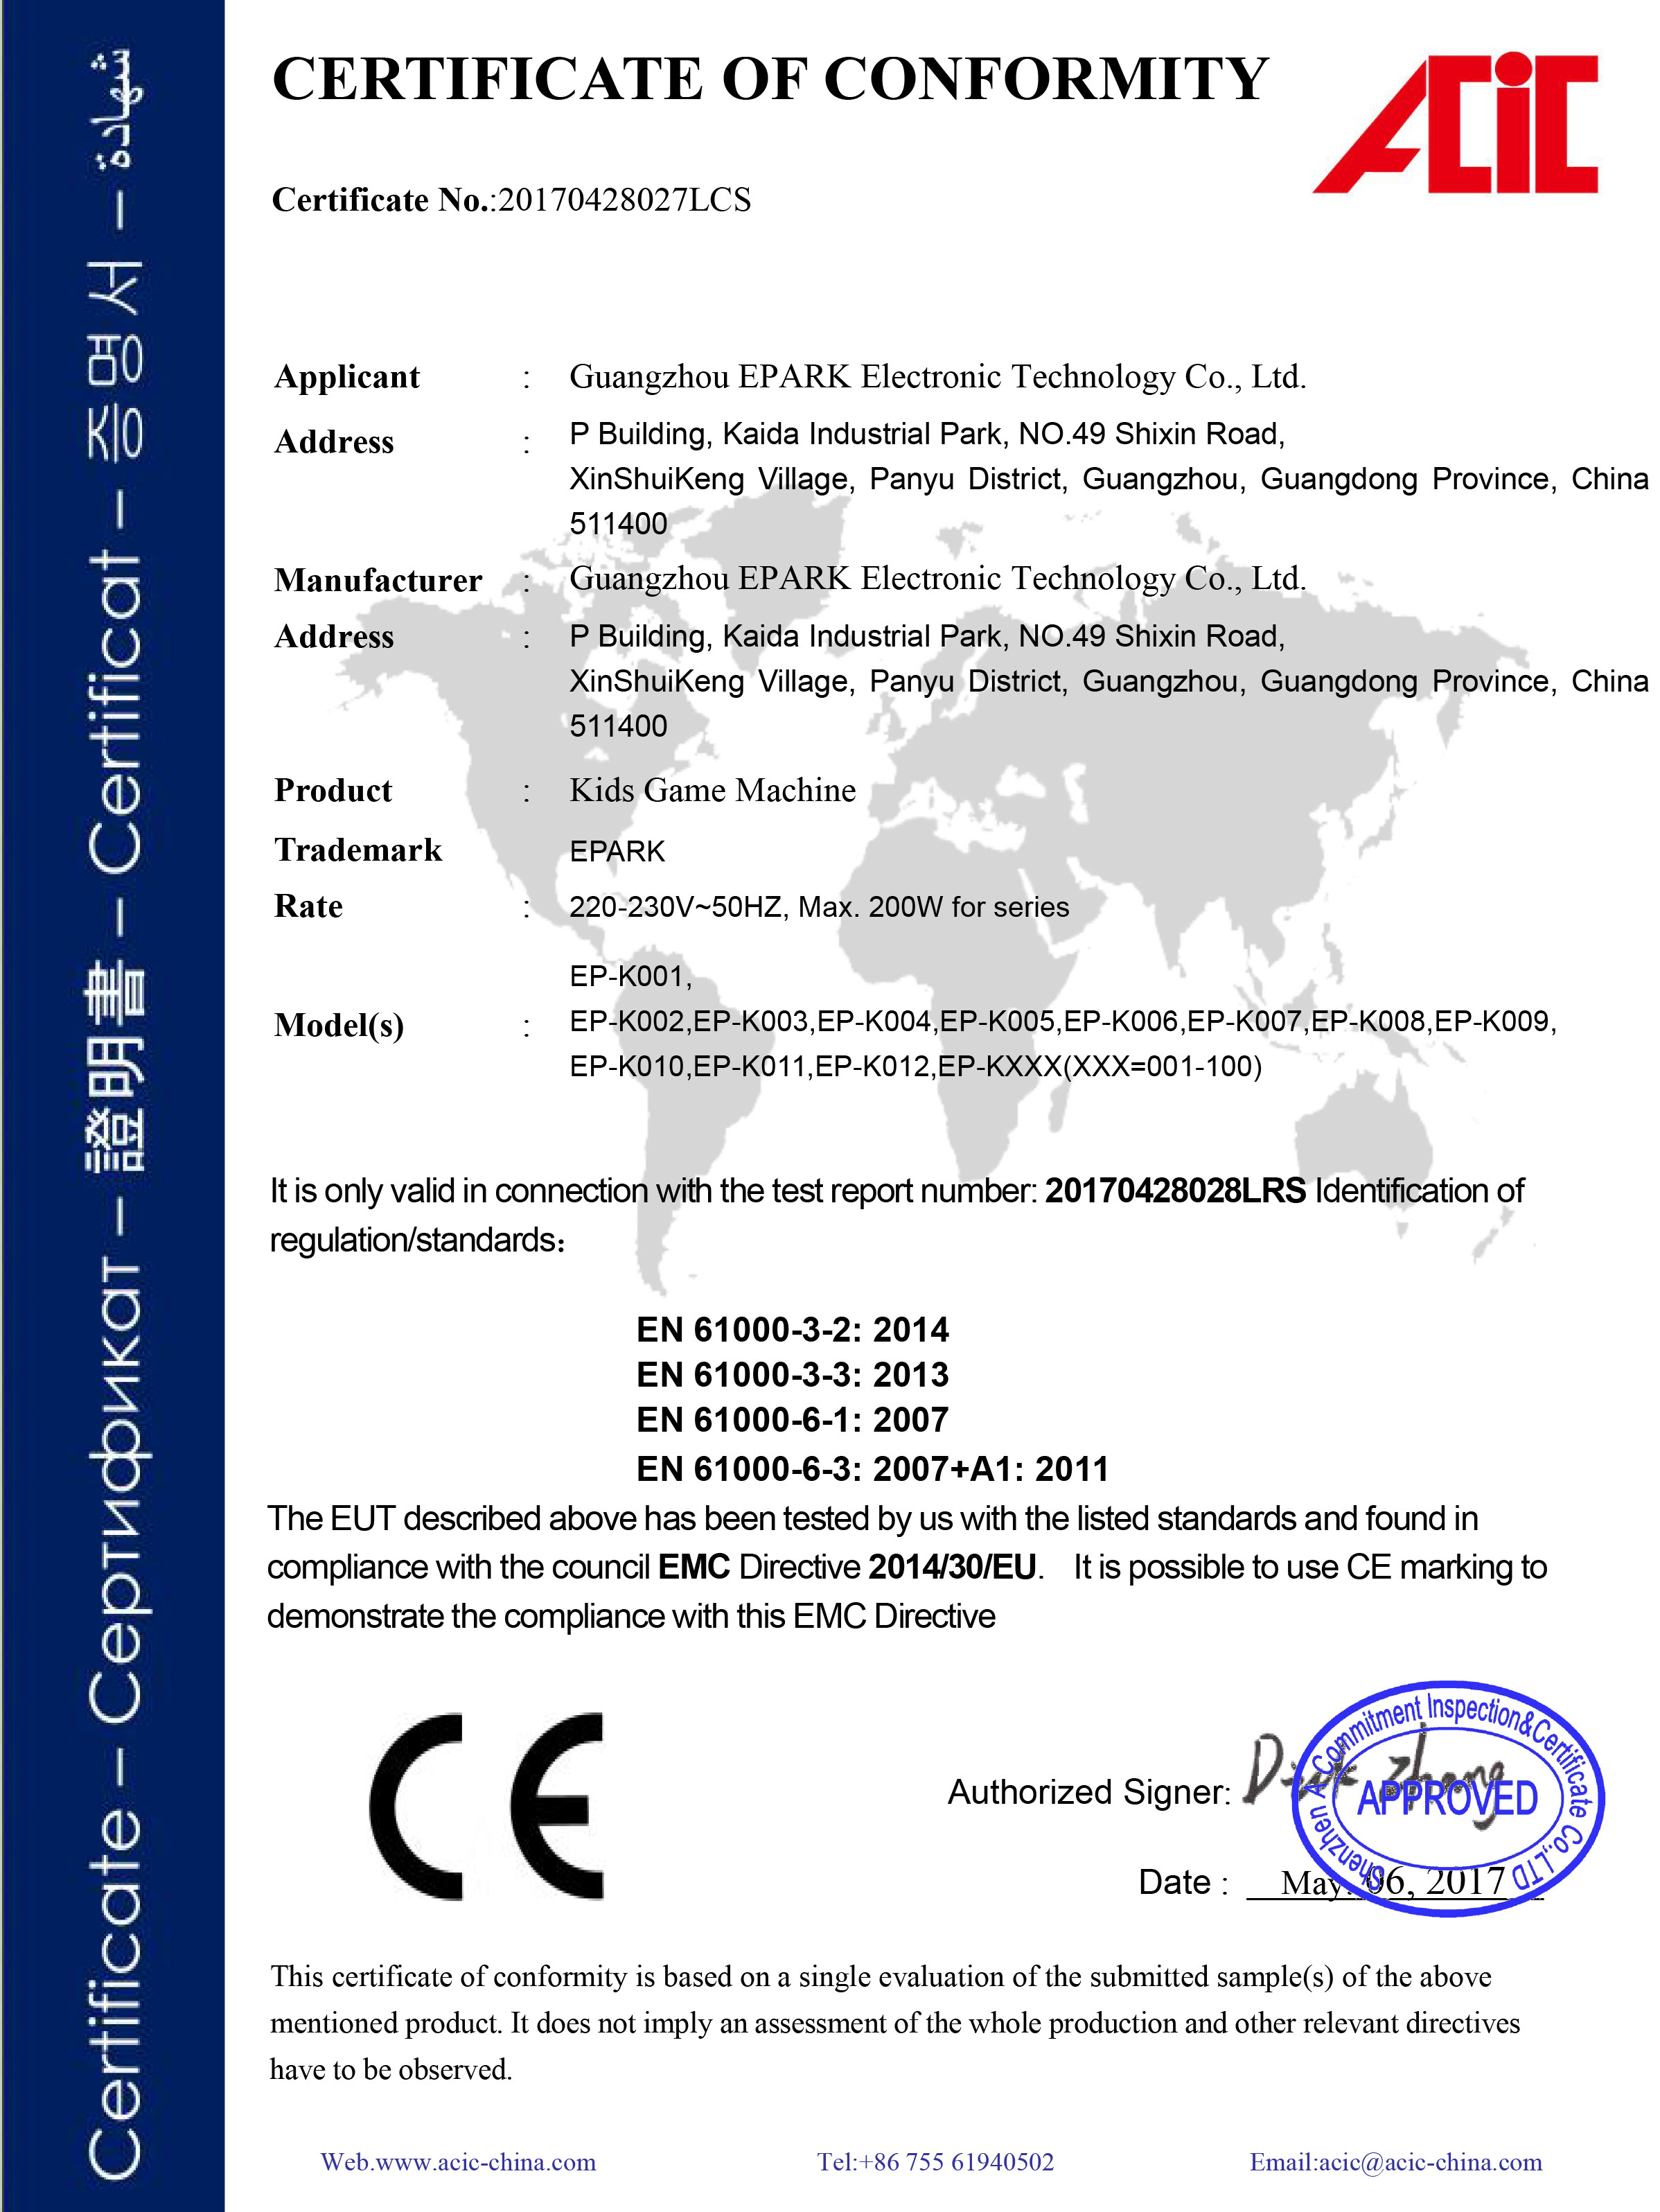 Guangzhou EPARK Electronic Technology Co., Ltd. Certifications